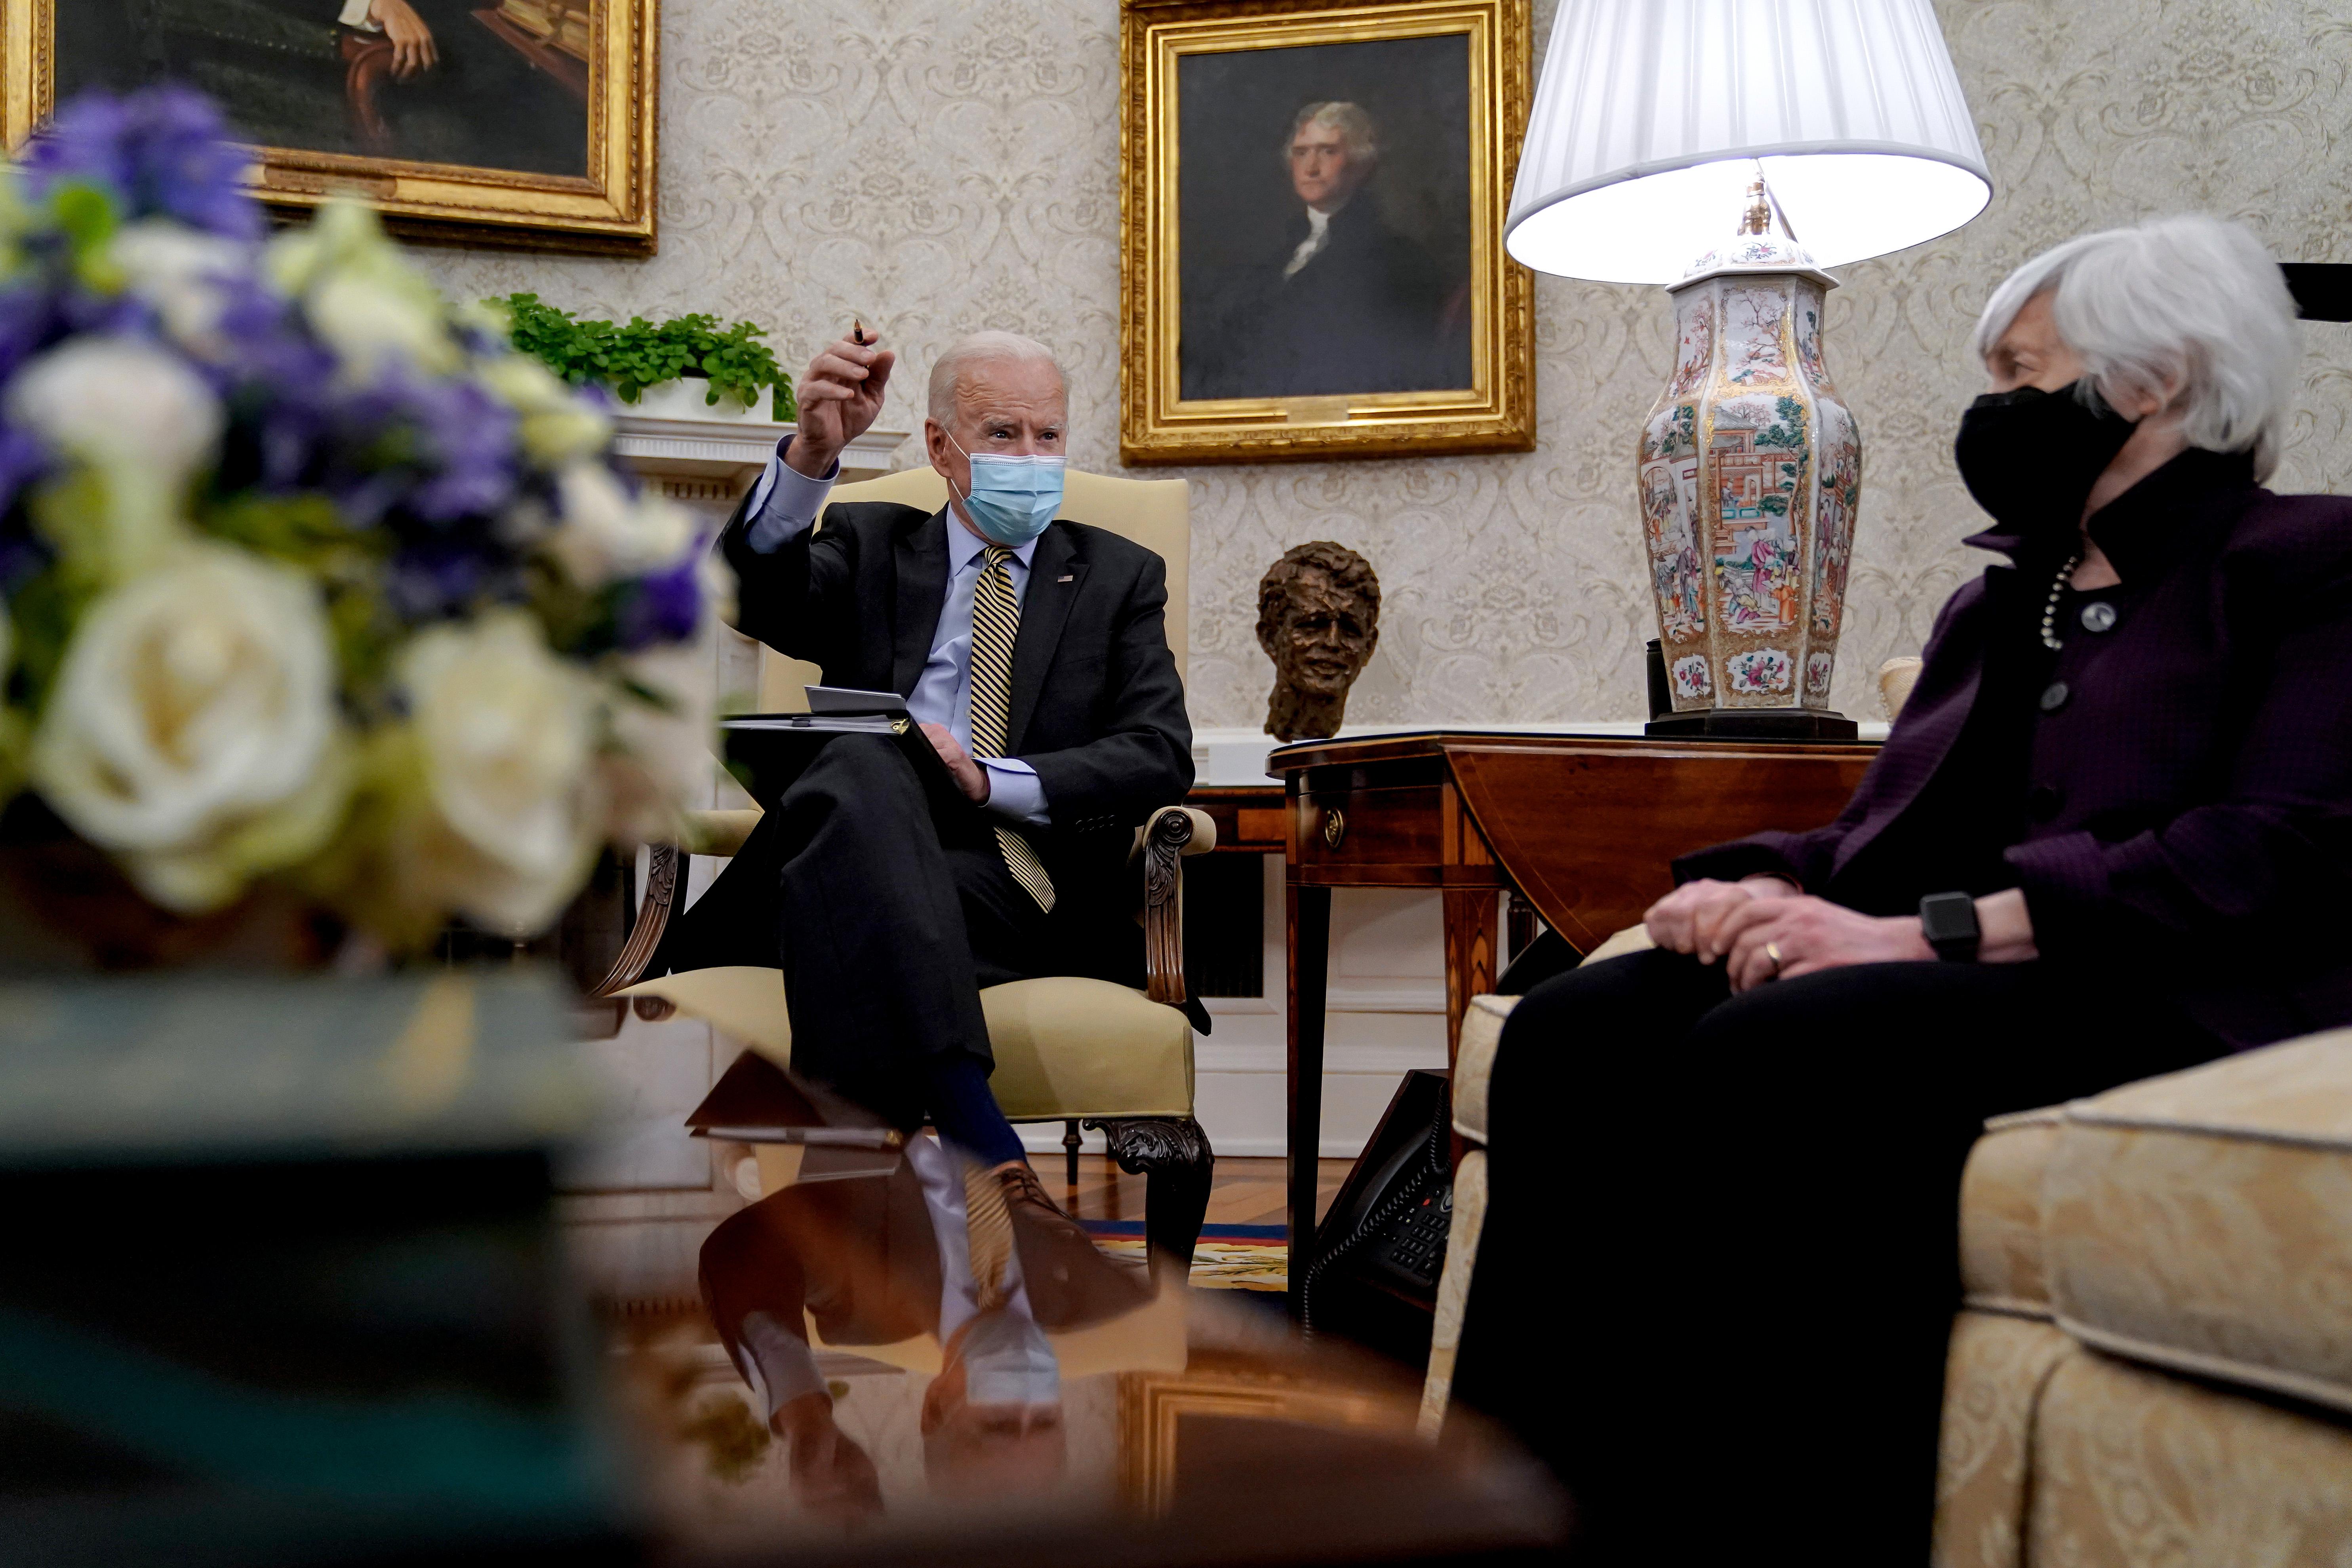 Joe Biden sits with Janet Yellen in the Oval Office, both wearing masks